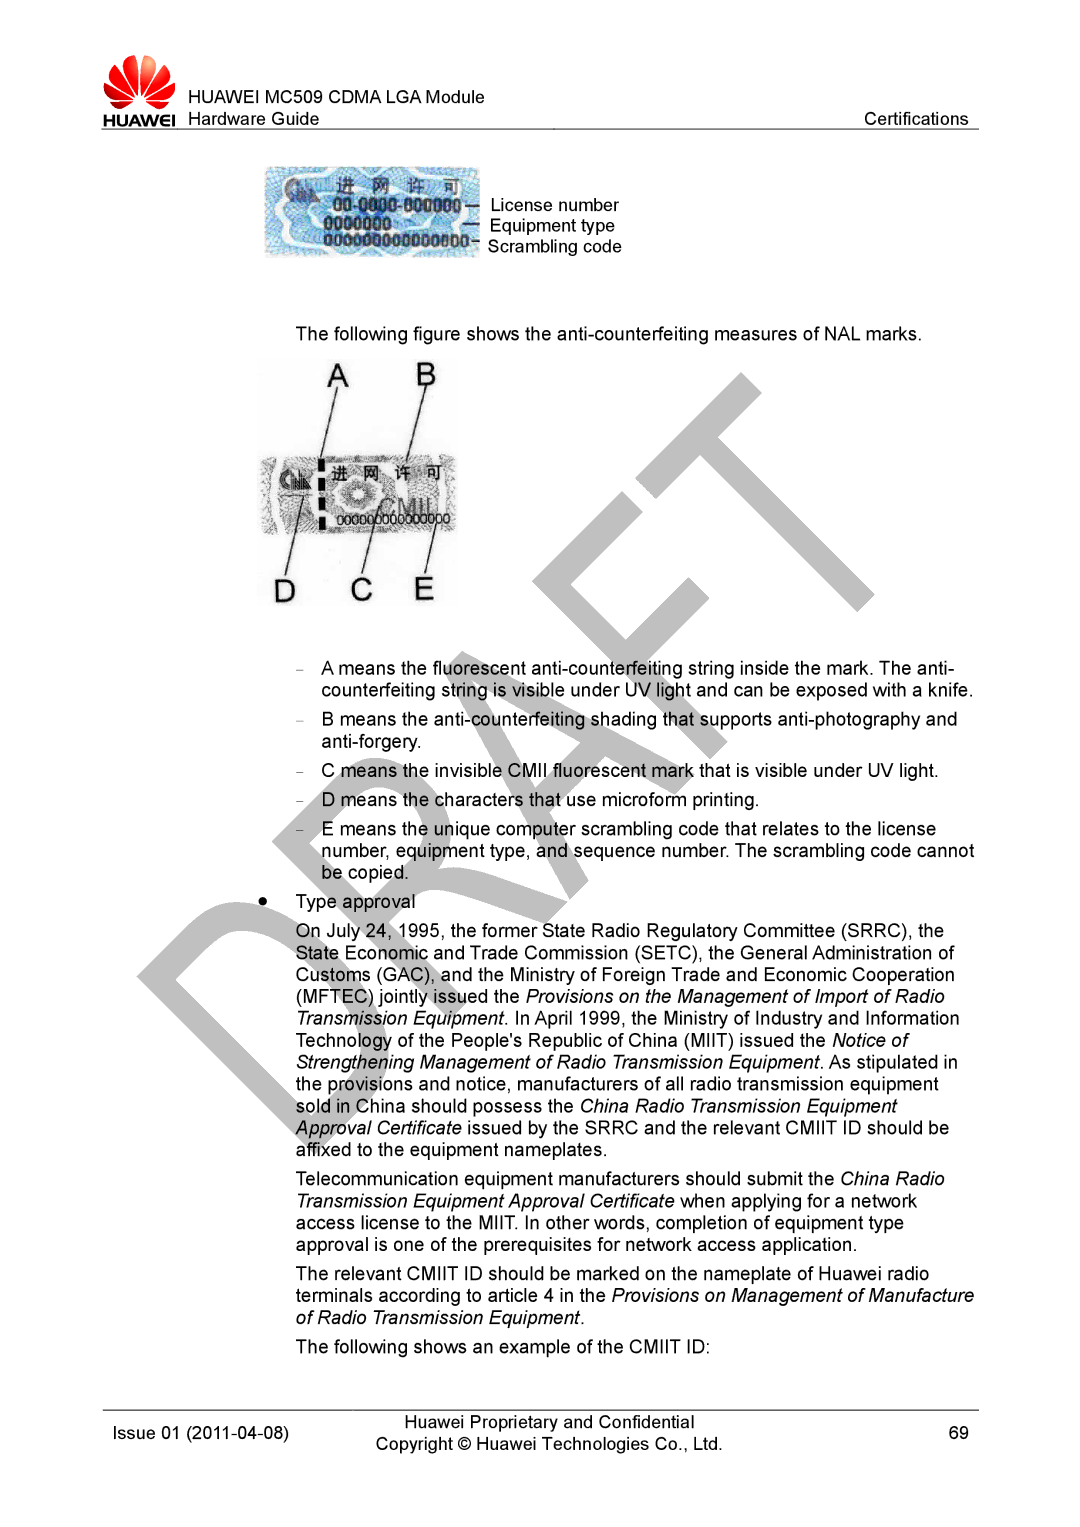 Huawei MC509 CDMA LGA manual Issue 01 Huawei Proprietary and Confidential 